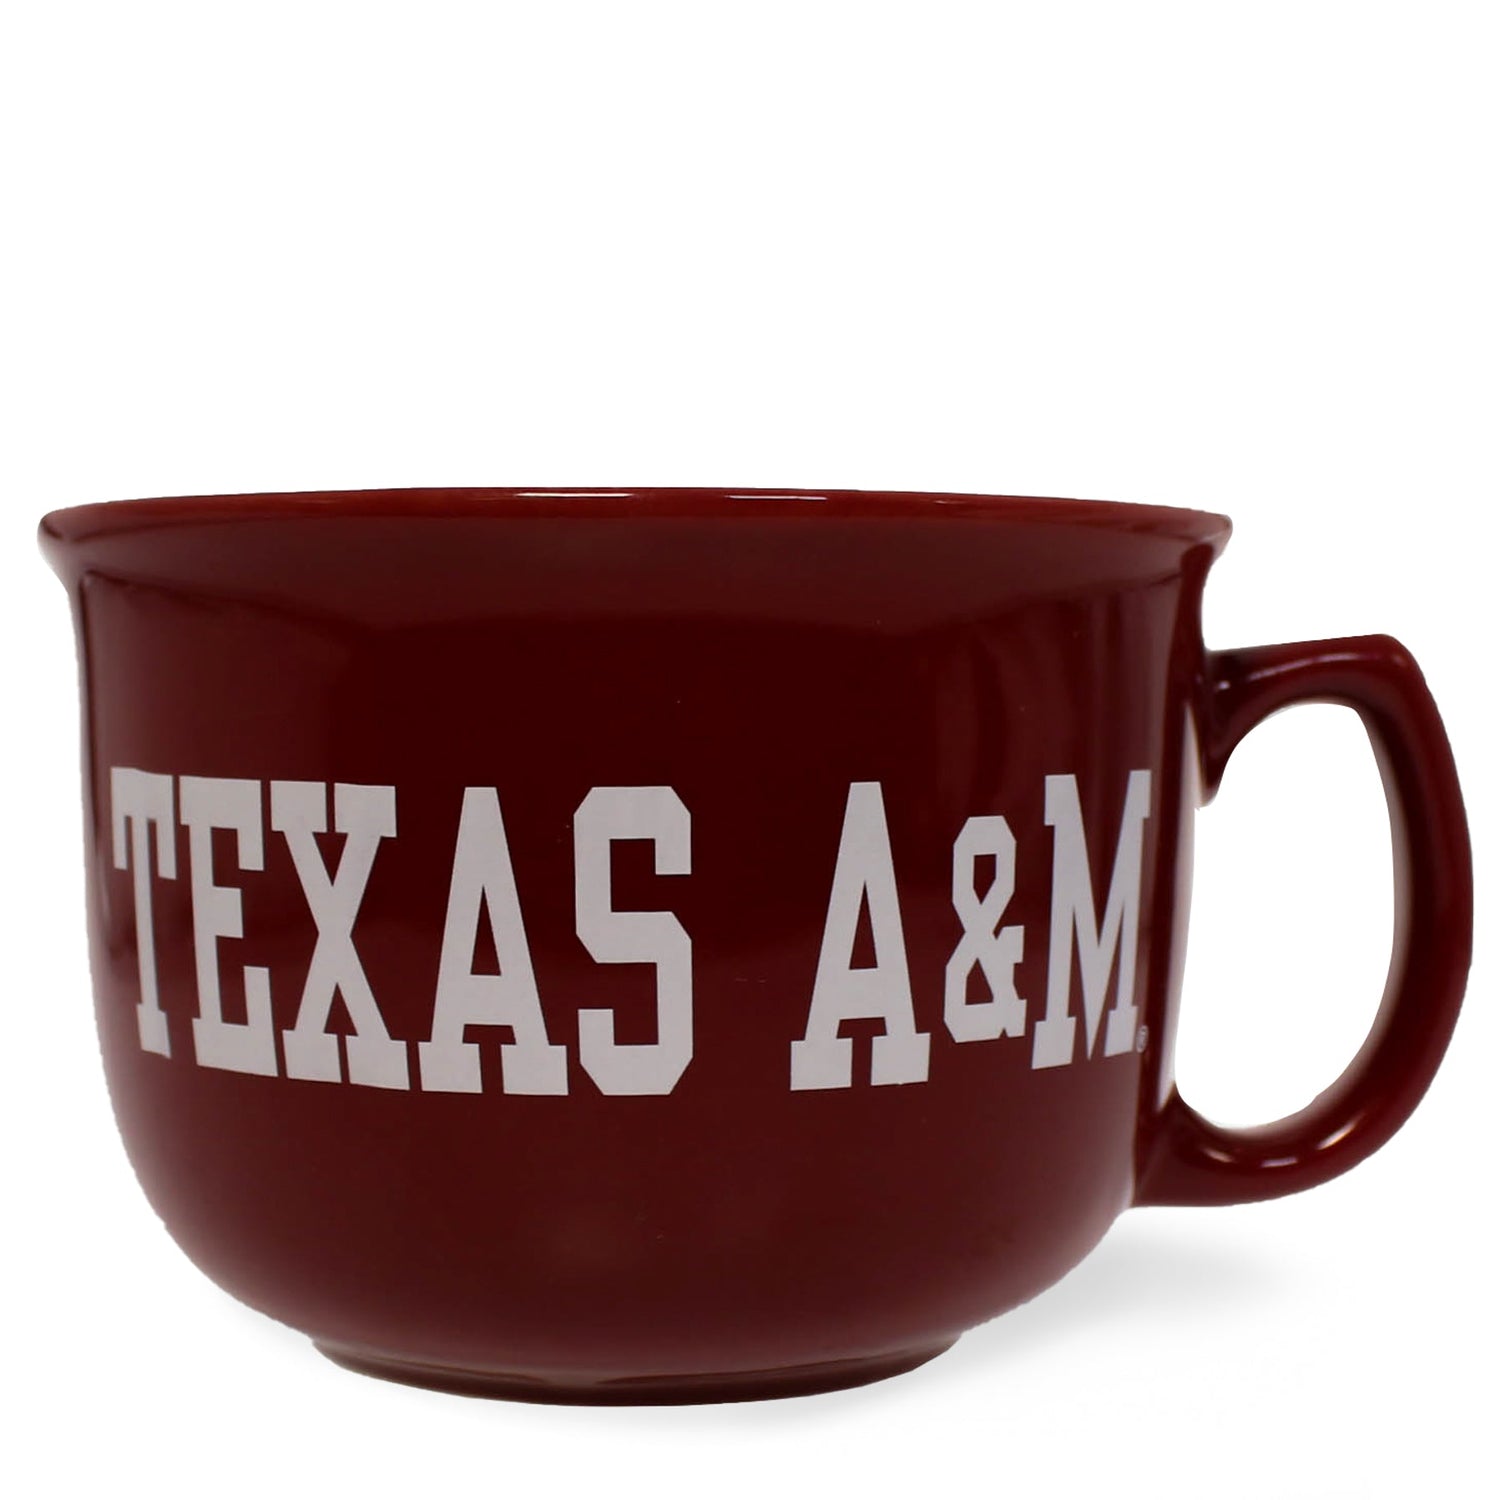 Texas A&M Collegiate Bowl With White Interior